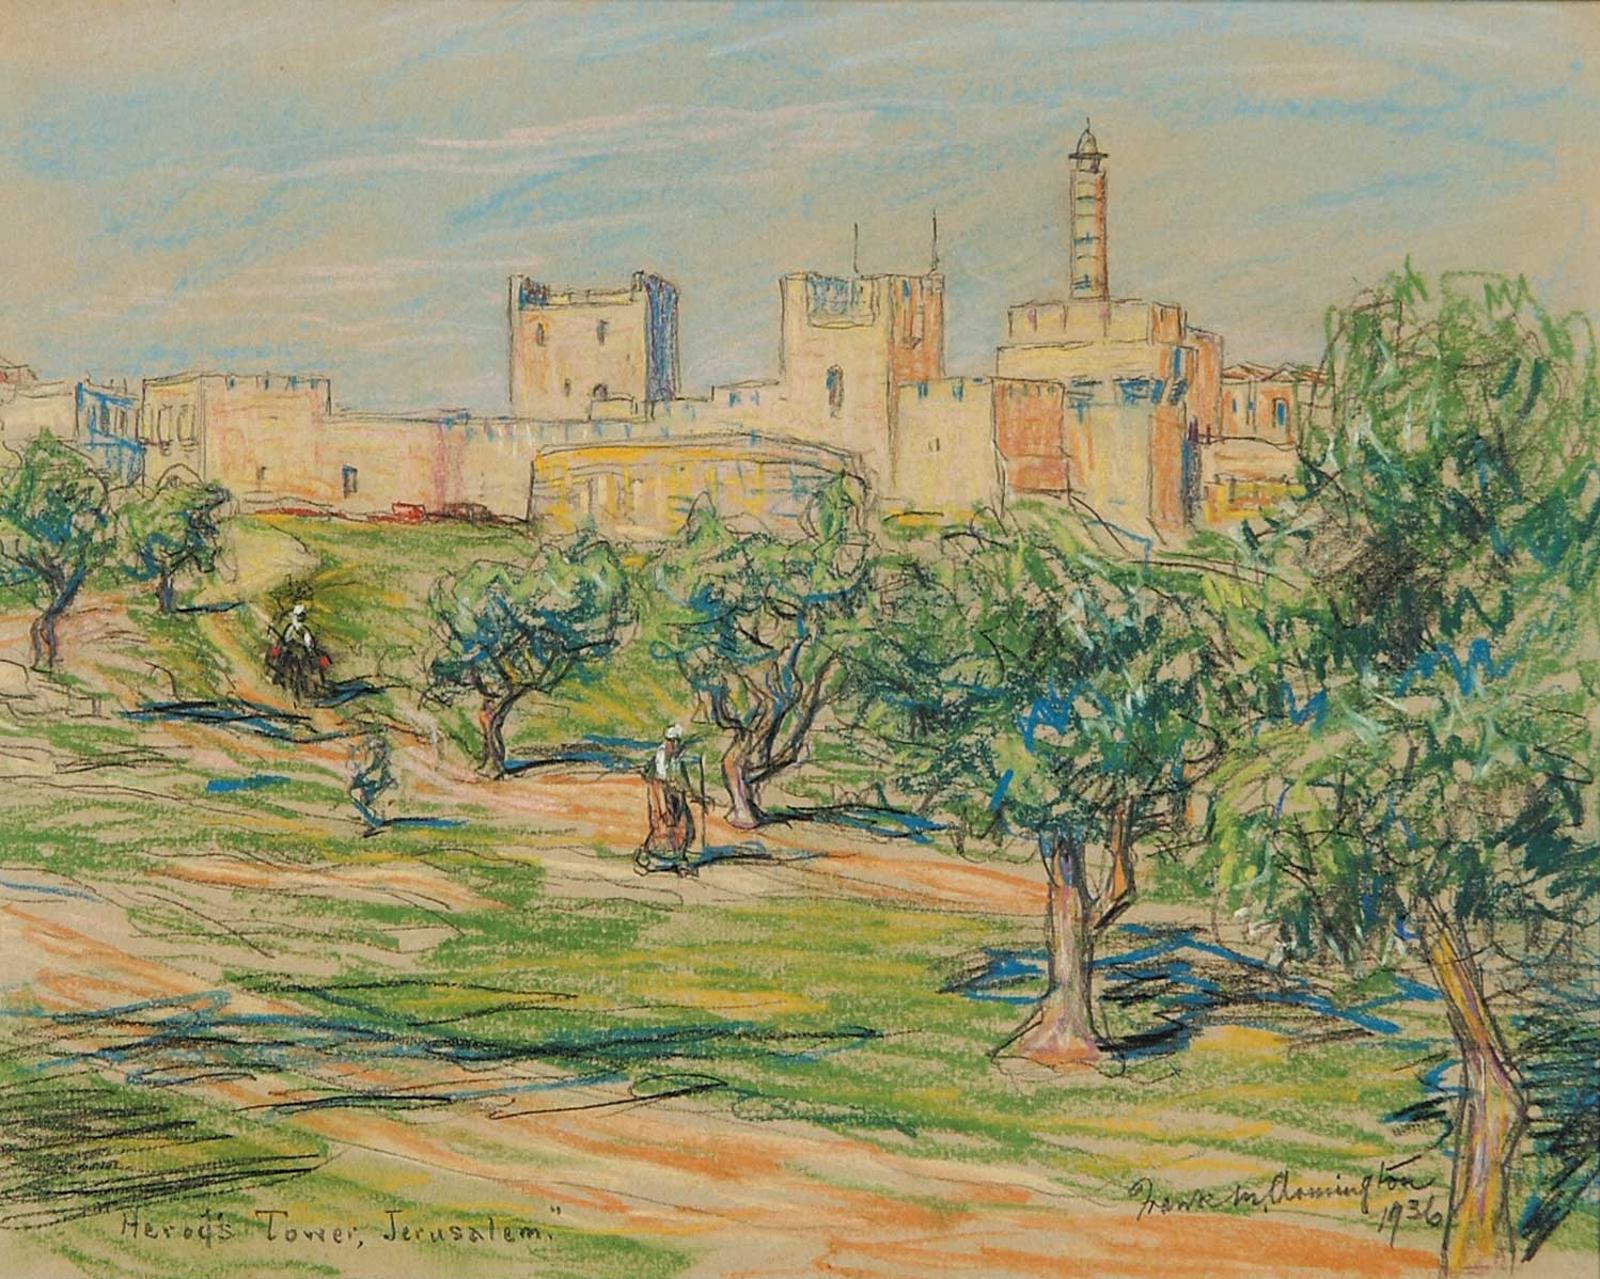 Franklin Milton Armington (1876-1941) - Herod's Tower, Jerusalem